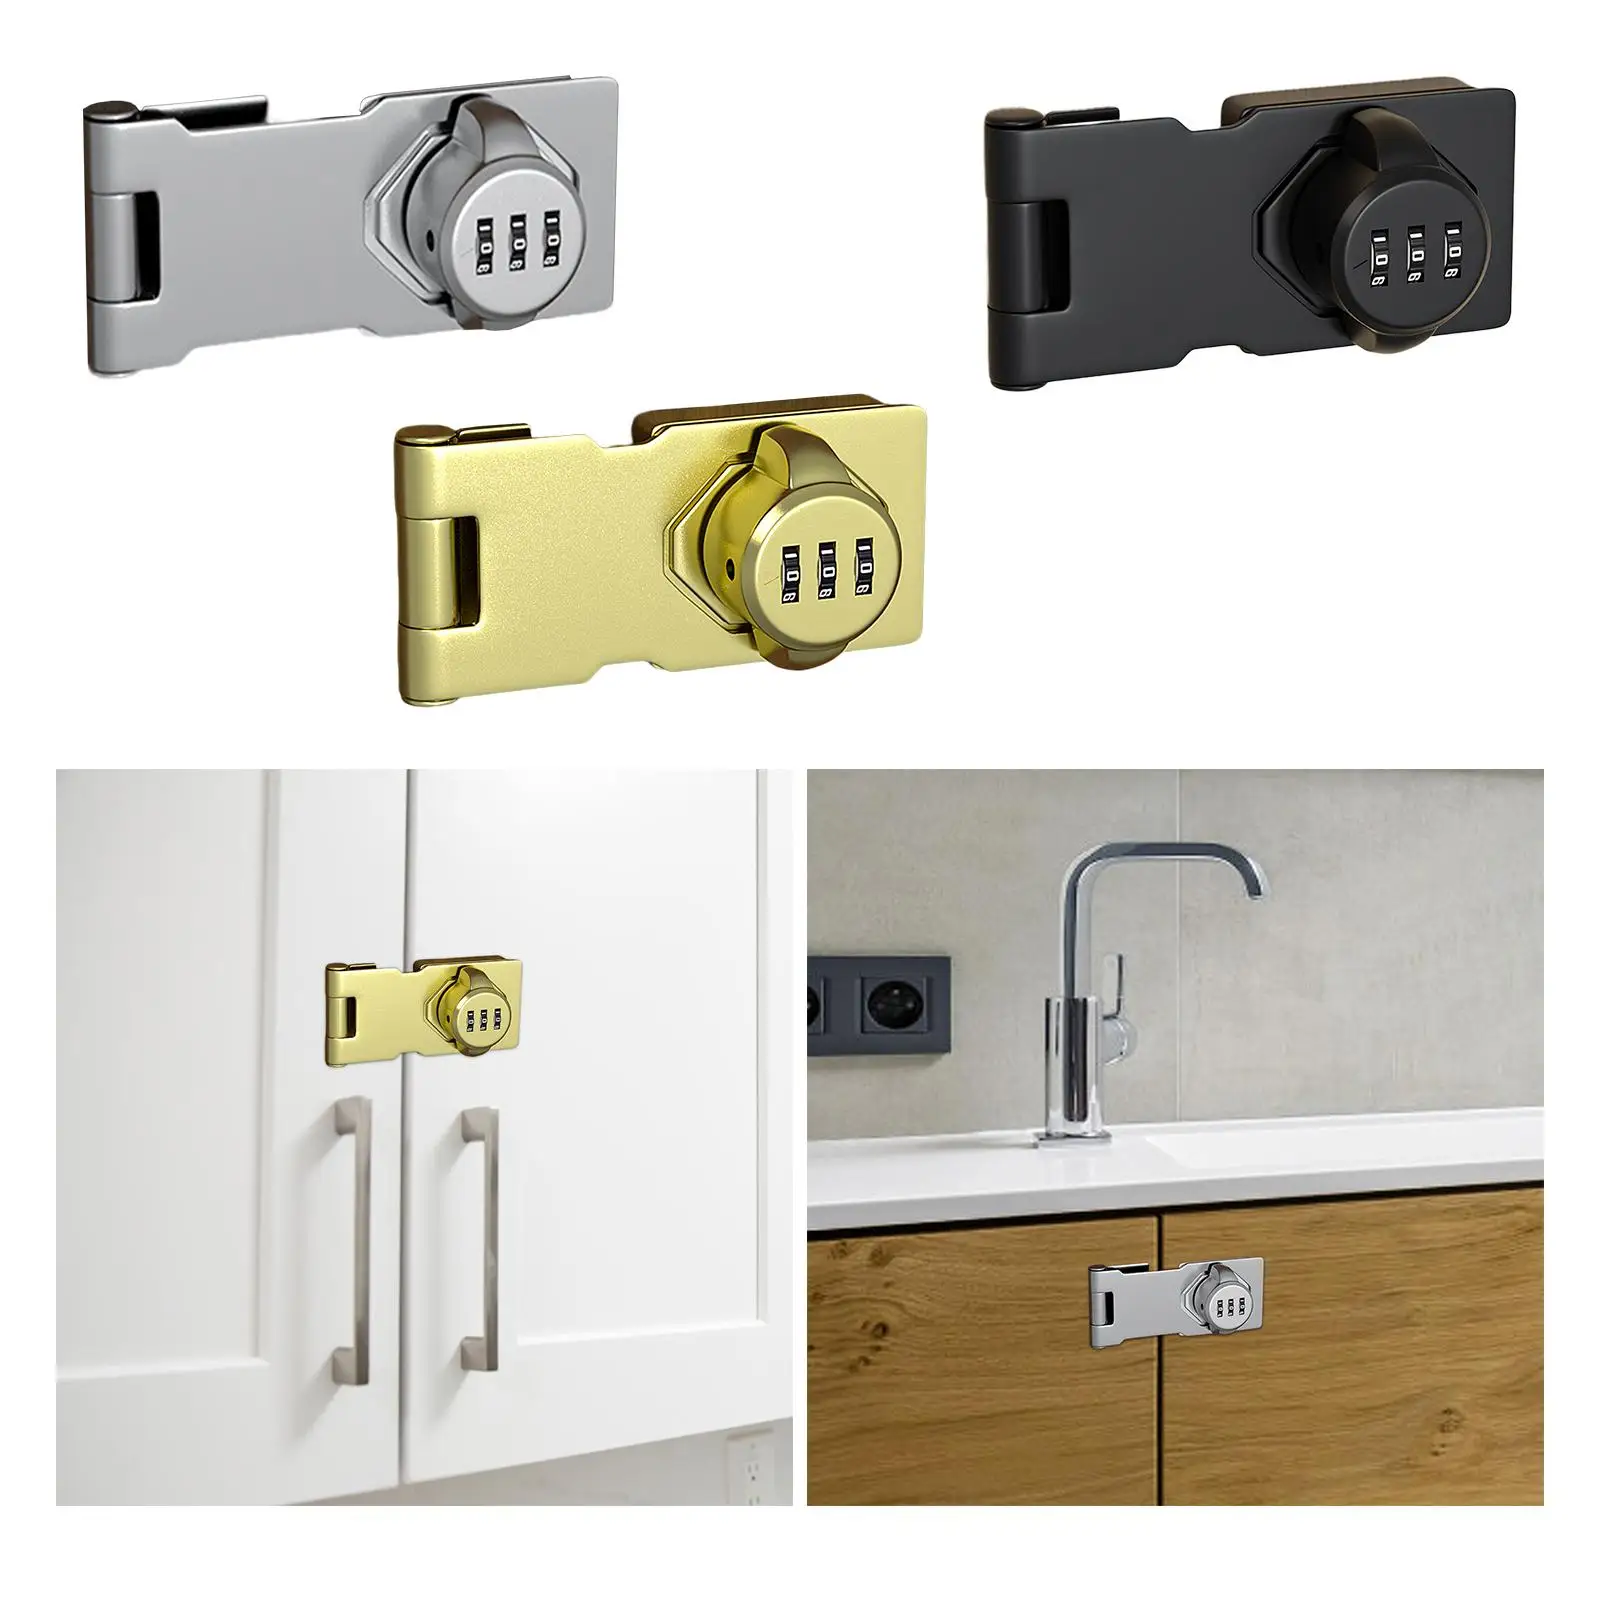 Mechanical Password Lock Keyless Rotary Hasp Lock File Cabinet Lock Refrigerator Lock for Small Doors Barn Door Cabinets Garden